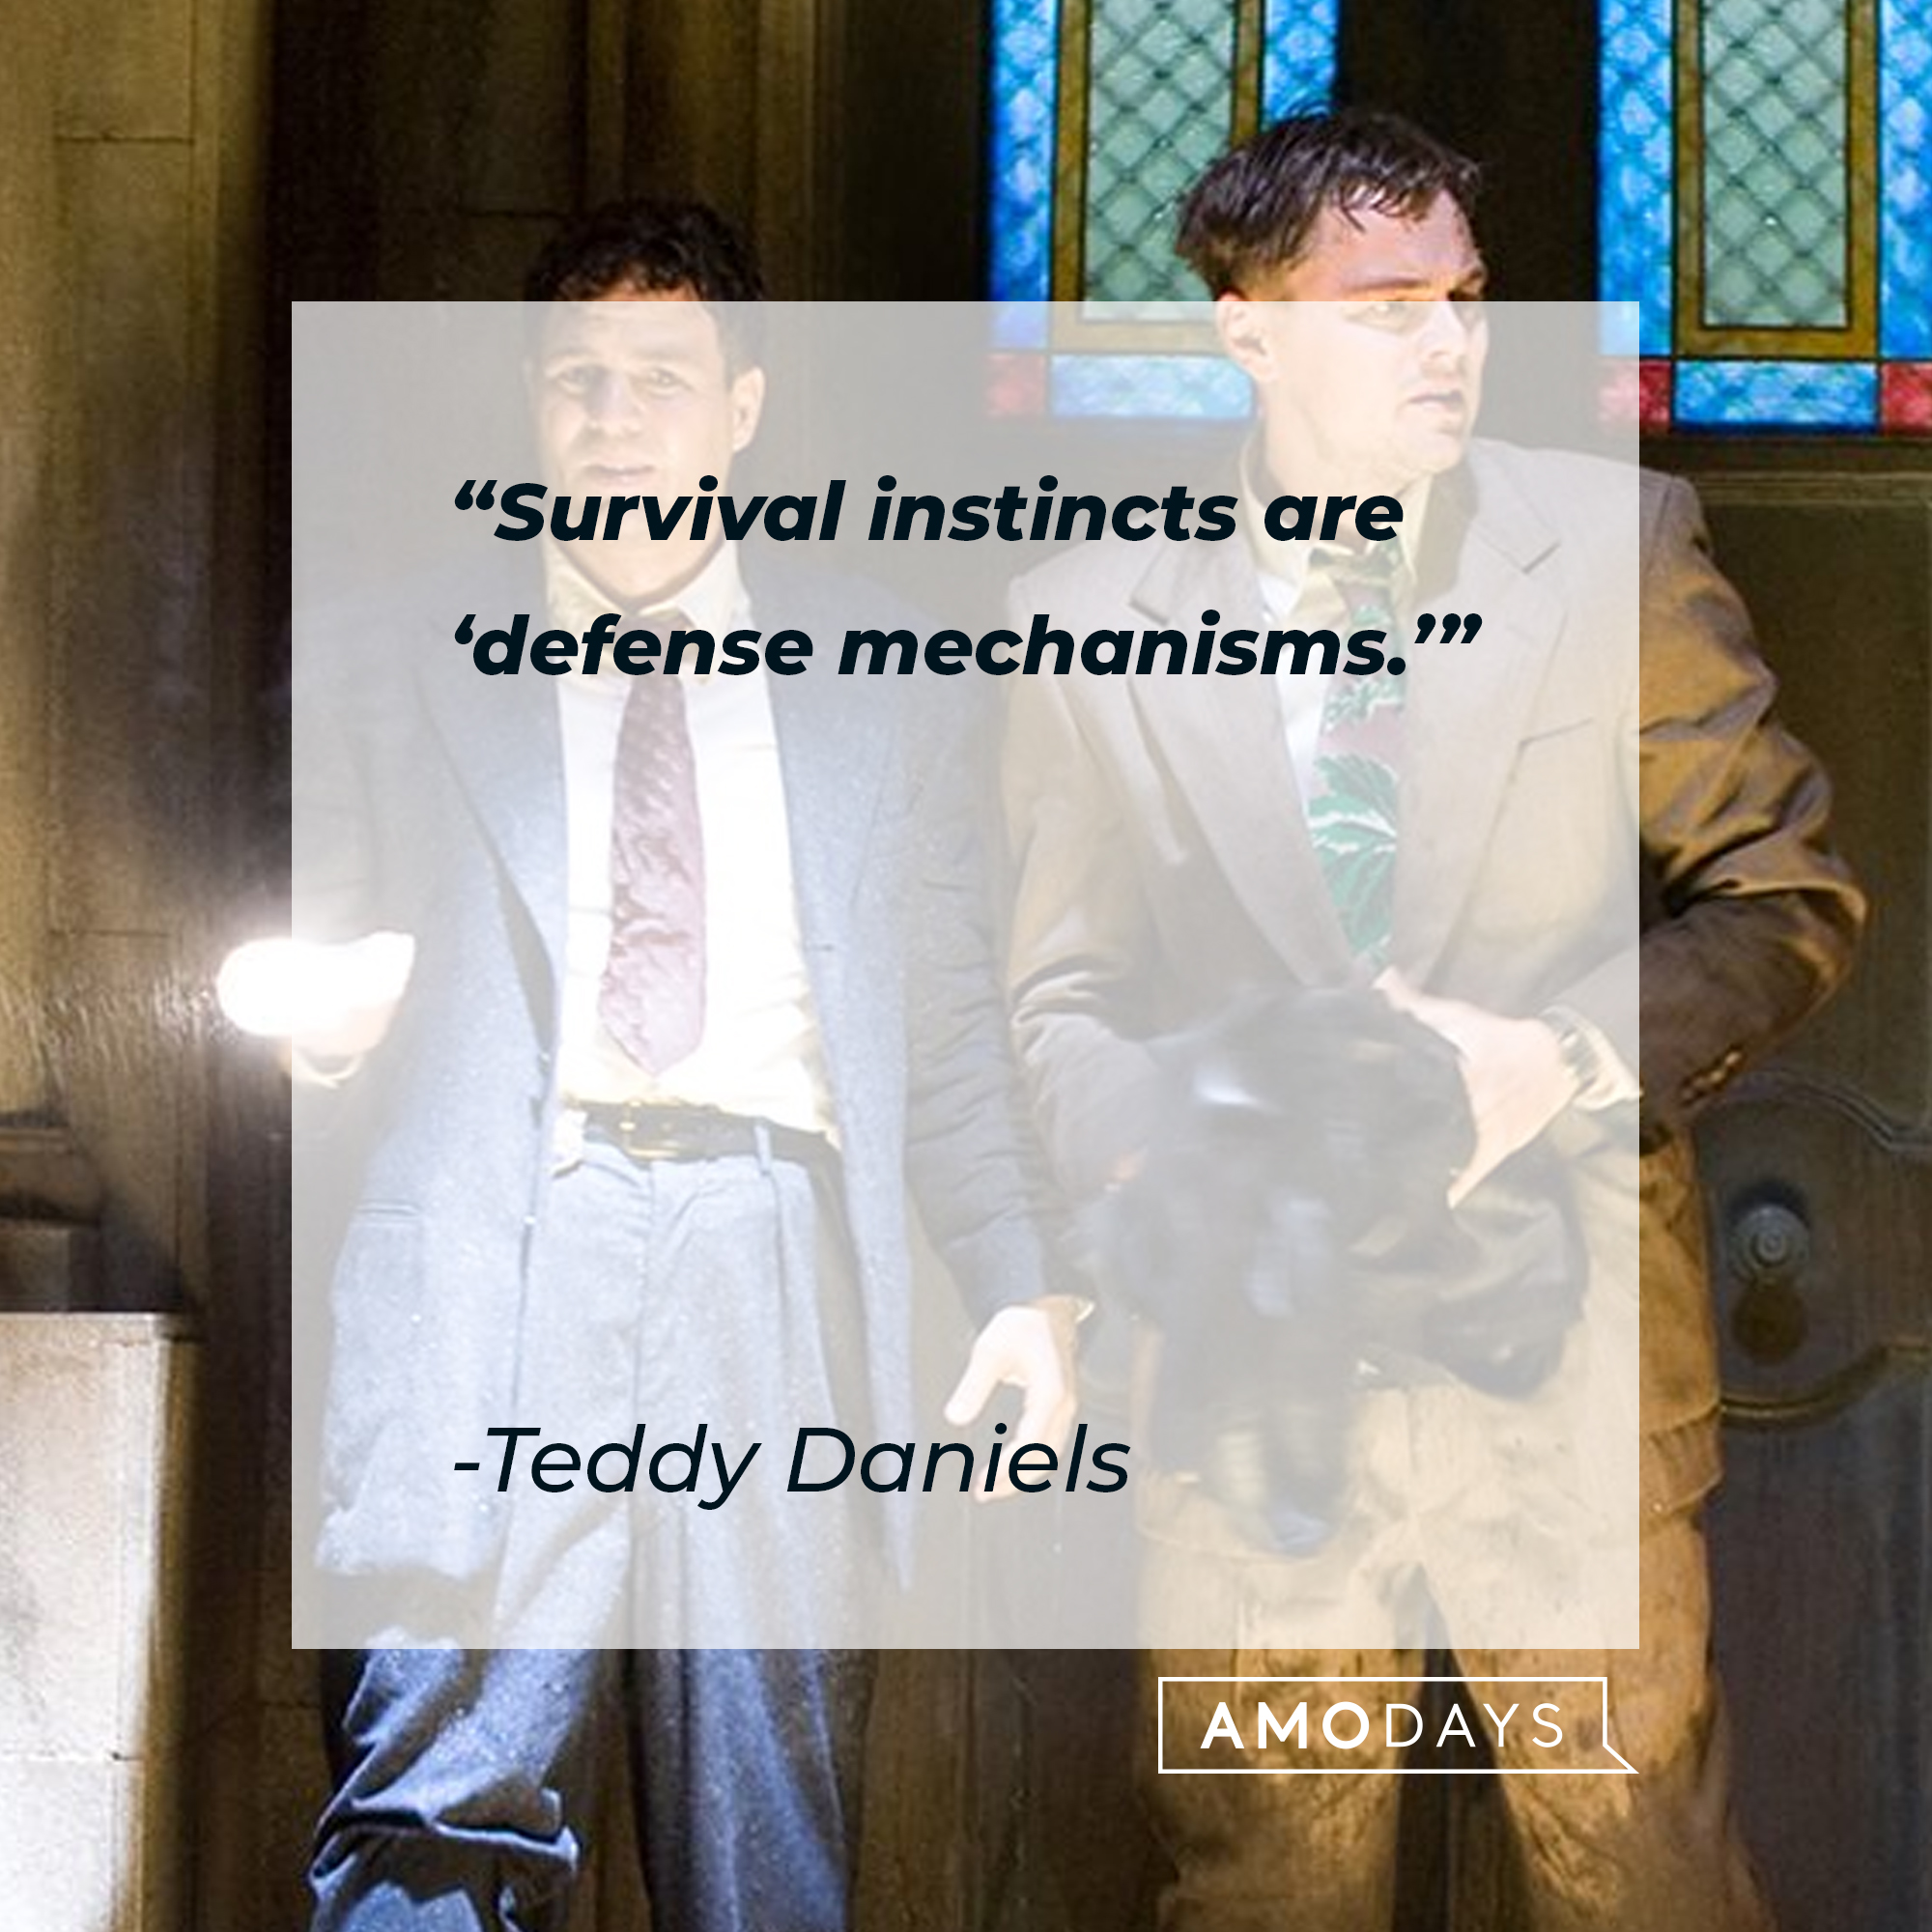 Teddy Daniels' quote: "Survival instincts are 'defense mechanisms.'" | Source: facebook.com/ShutterIsland